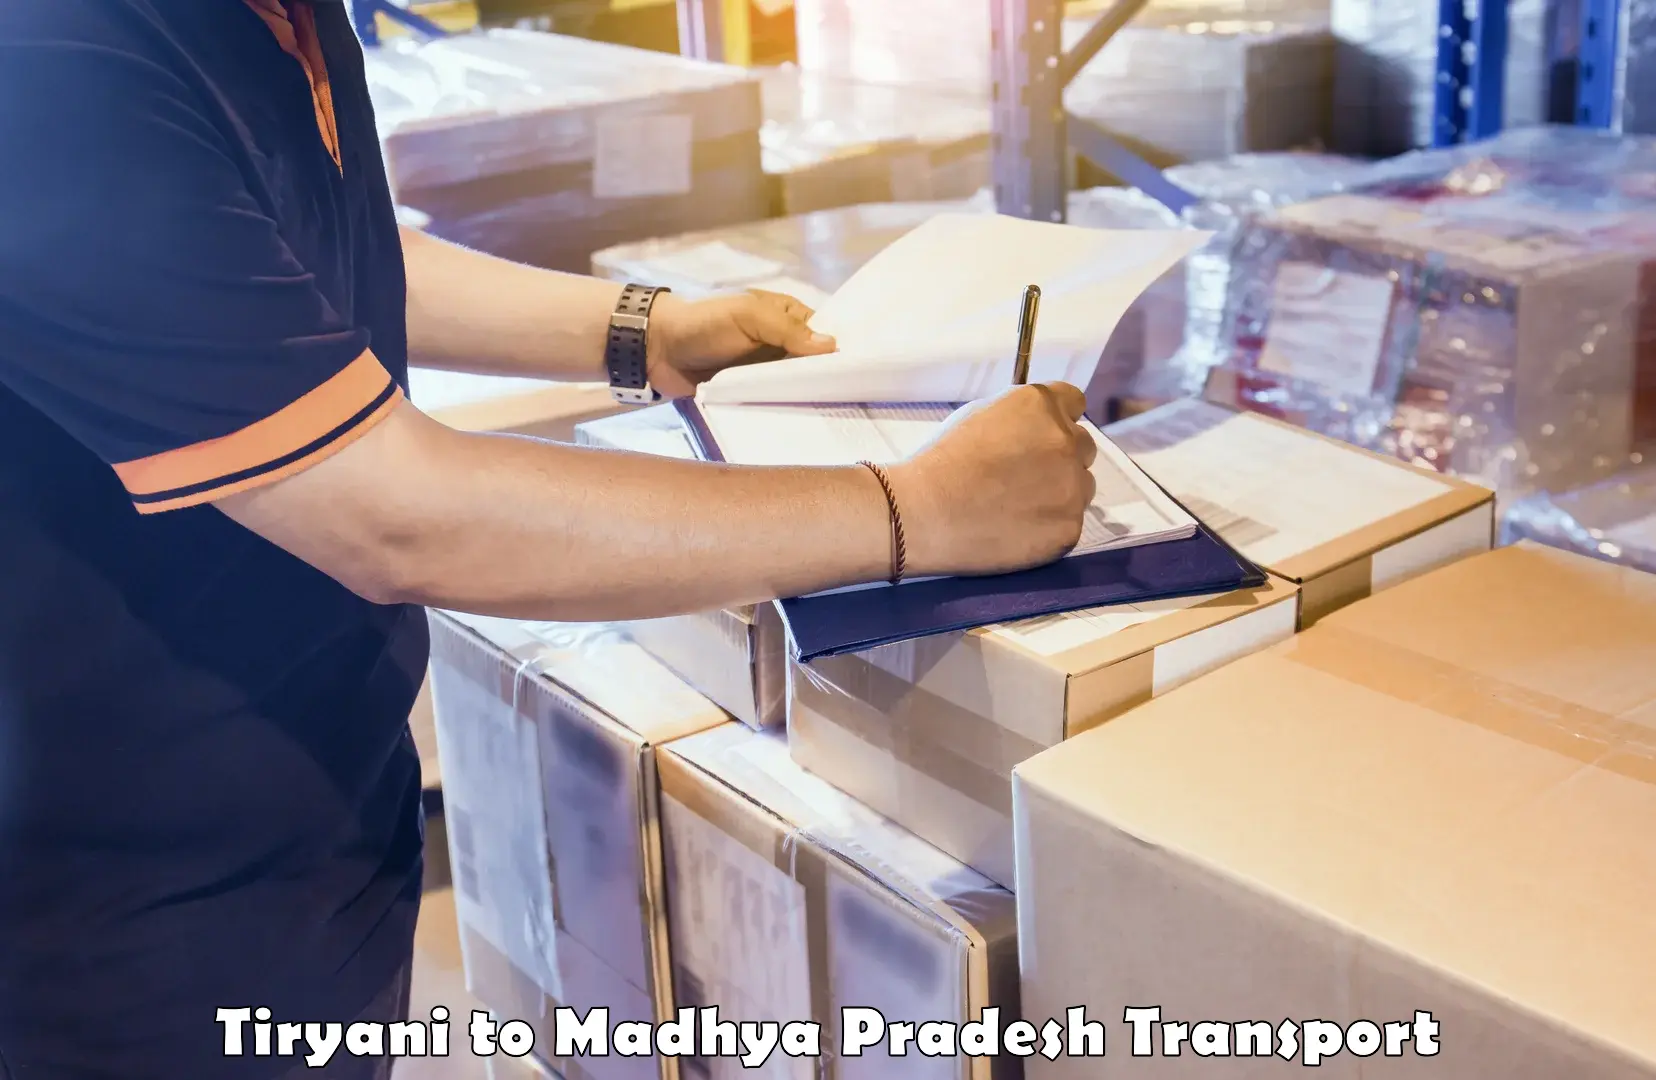 Truck transport companies in India Tiryani to Chanderi